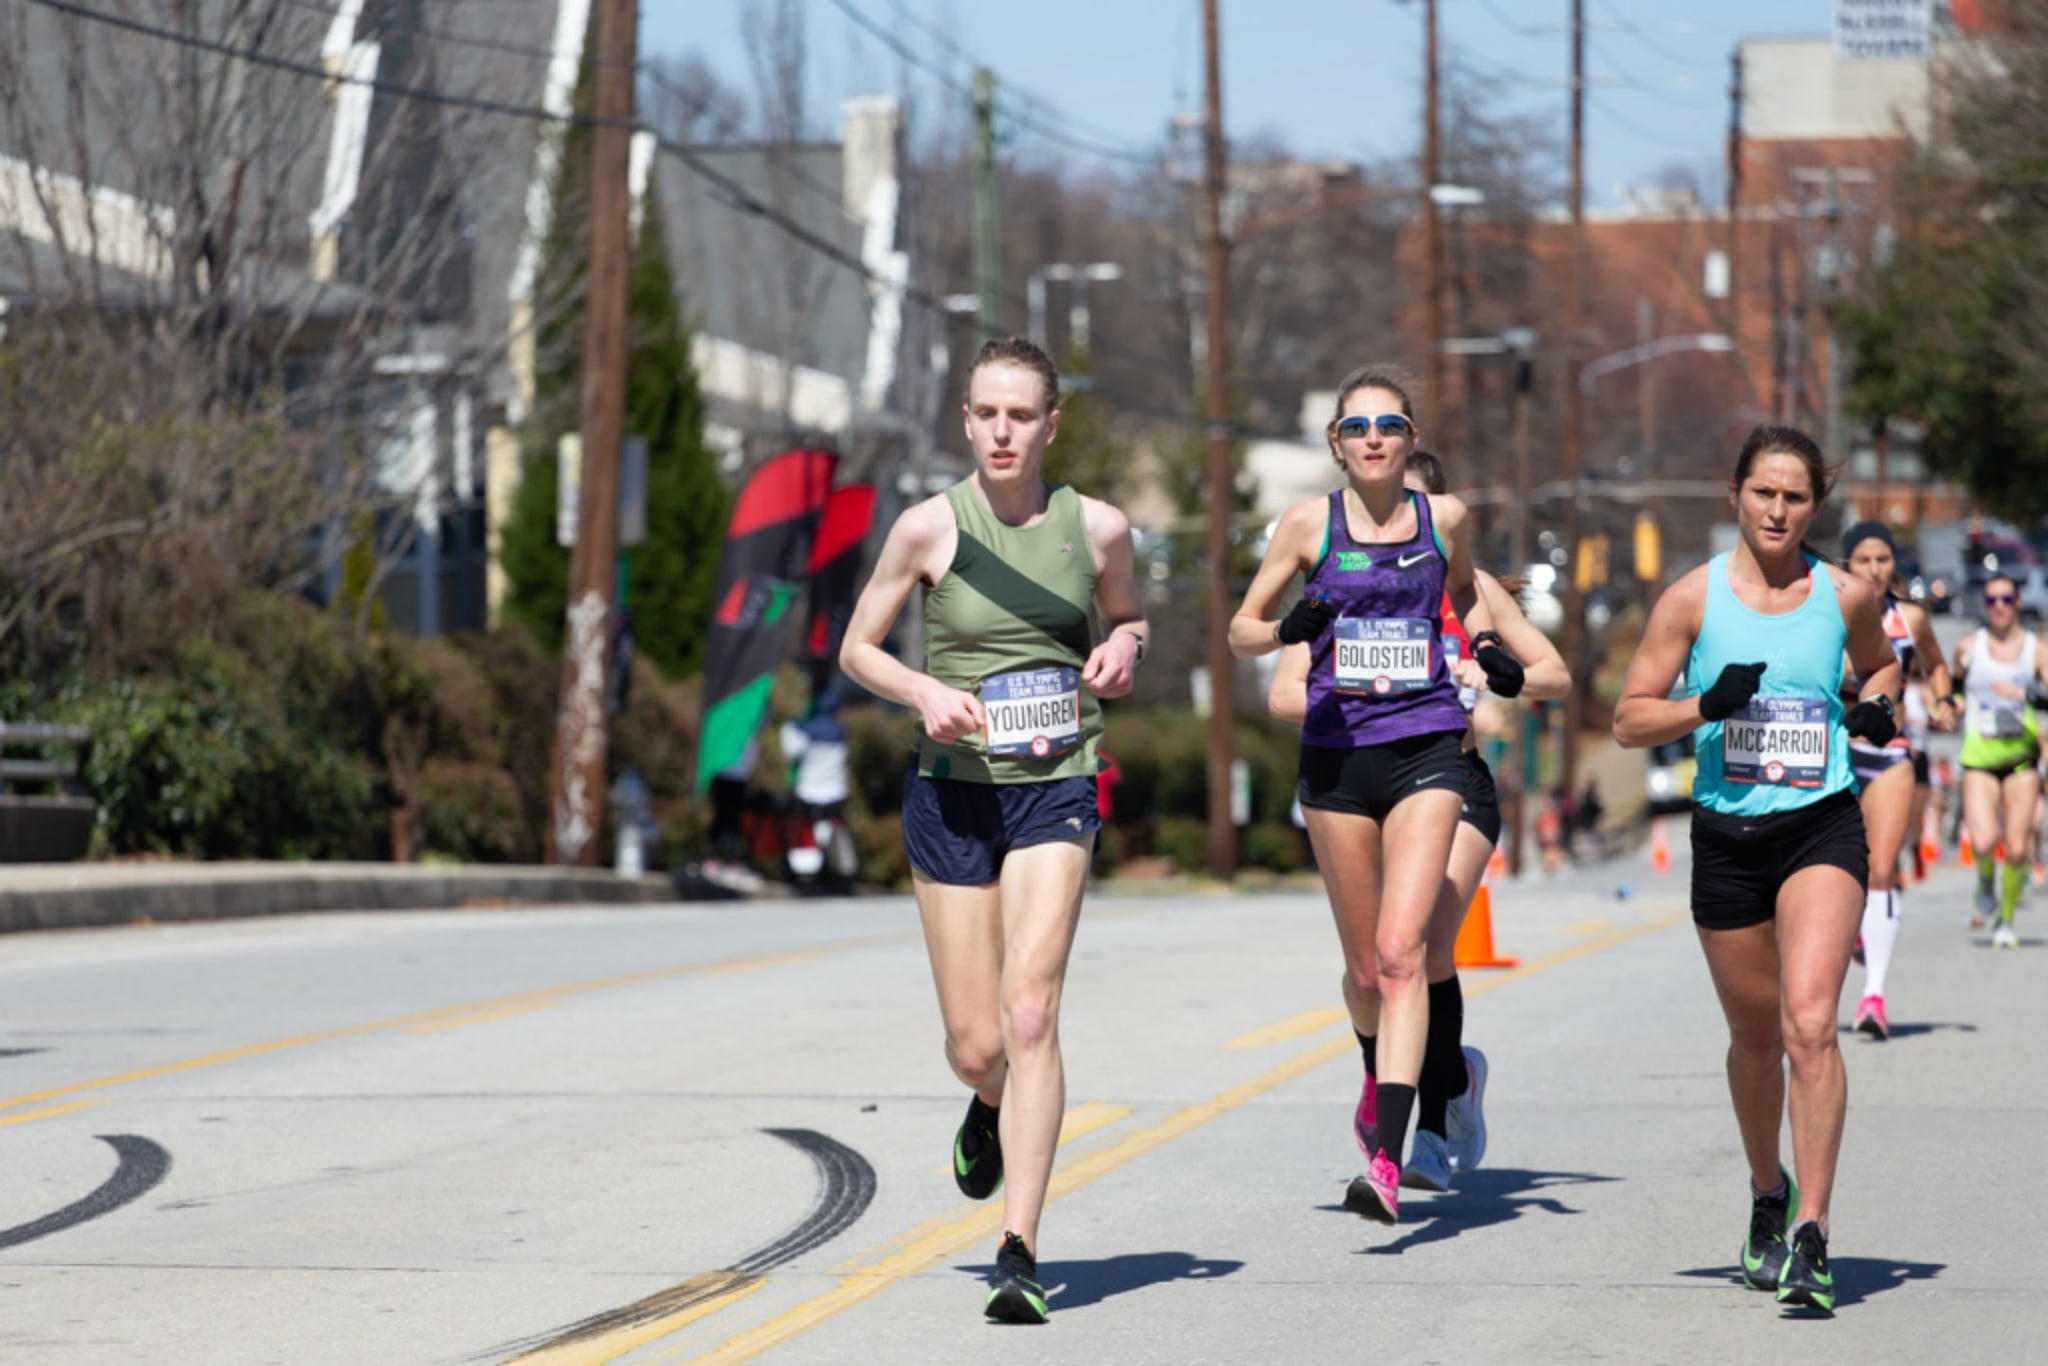 Megan Youngren running in the US Olympic marathon trials